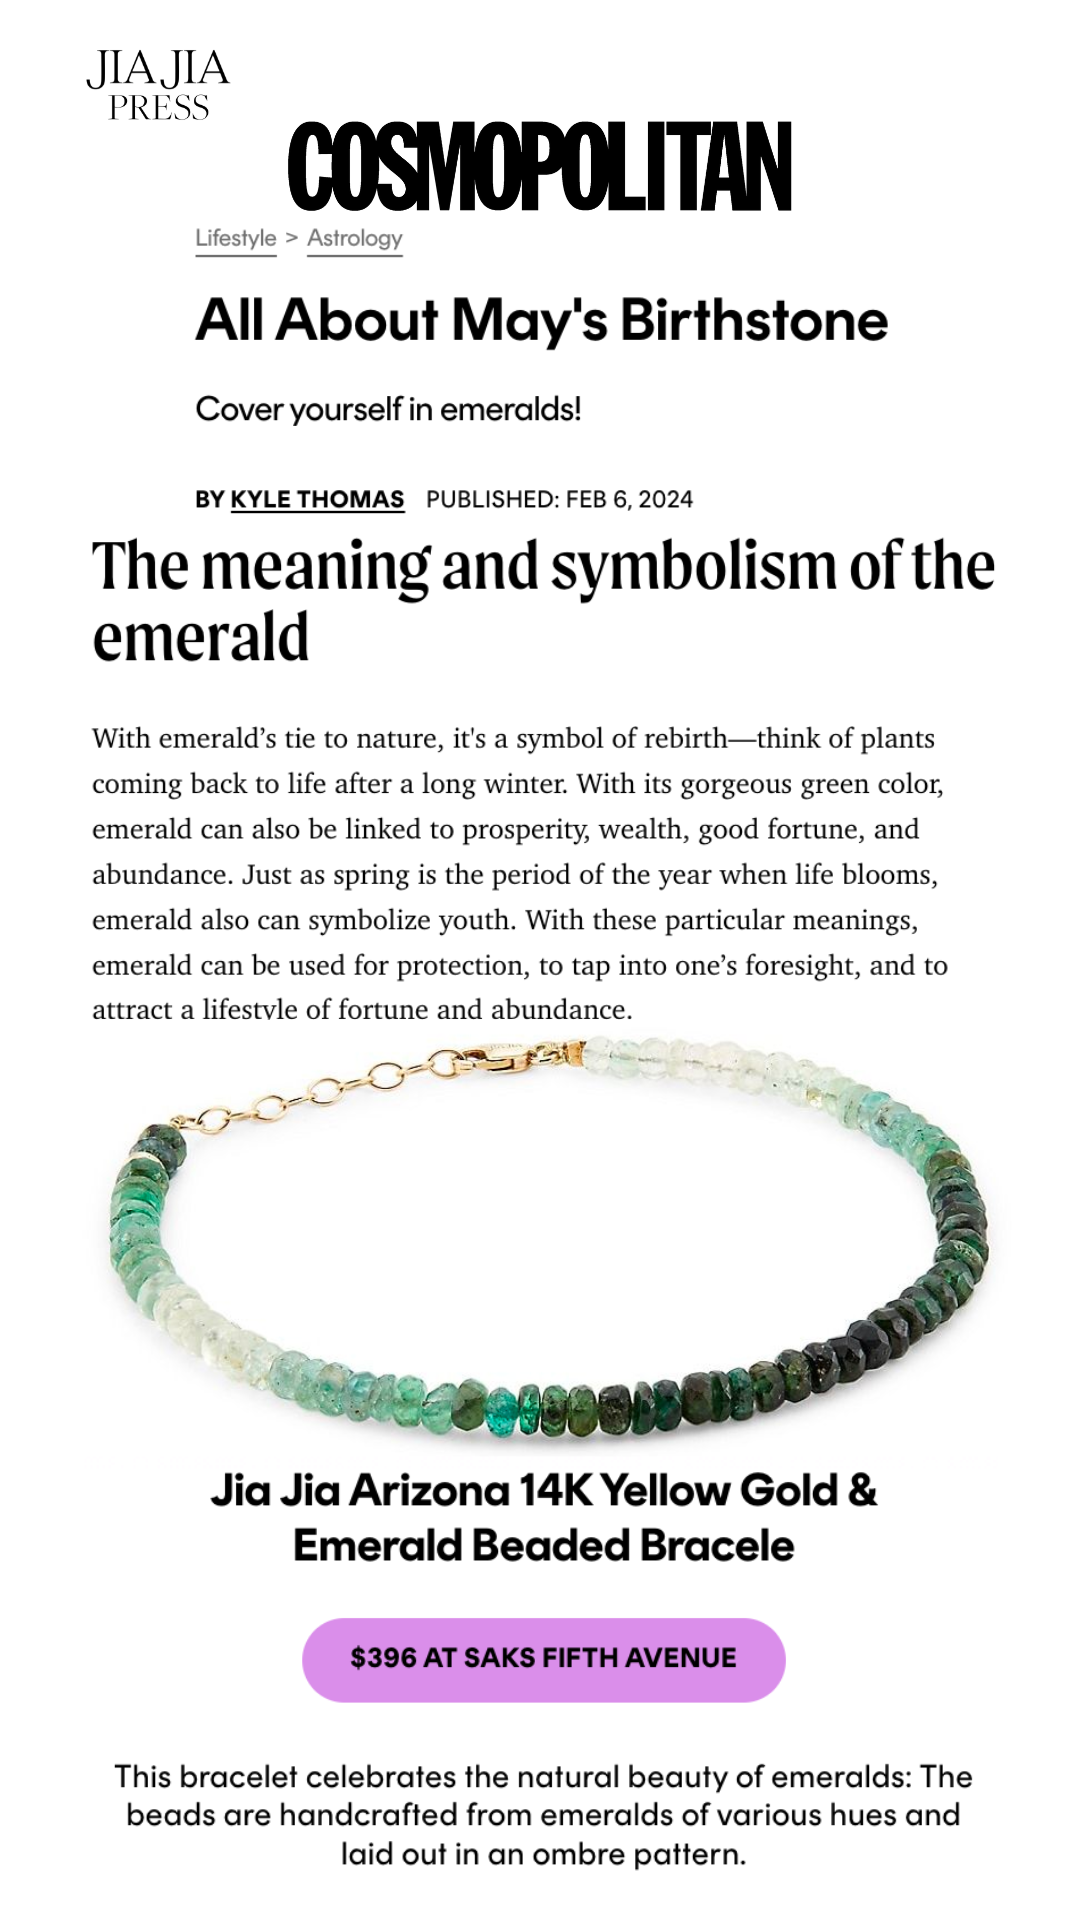 Arizona Emerald Bracelet